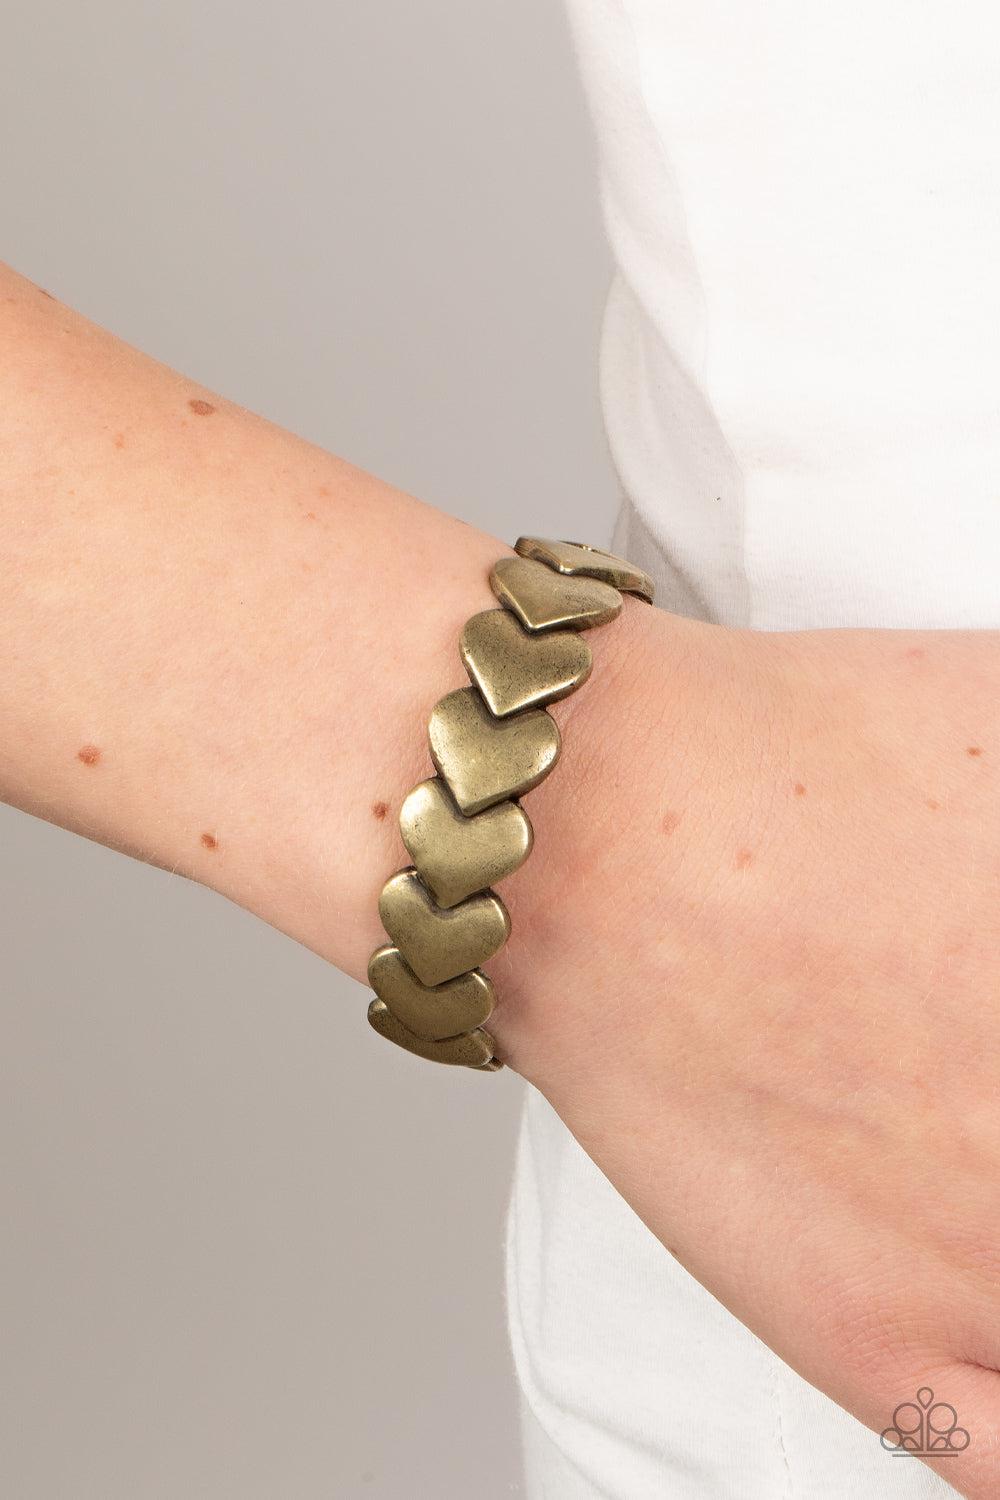 Hearts Galore Brass Cuff Bracelet - Paparazzi Accessories- lightbox - CarasShop.com - $5 Jewelry by Cara Jewels